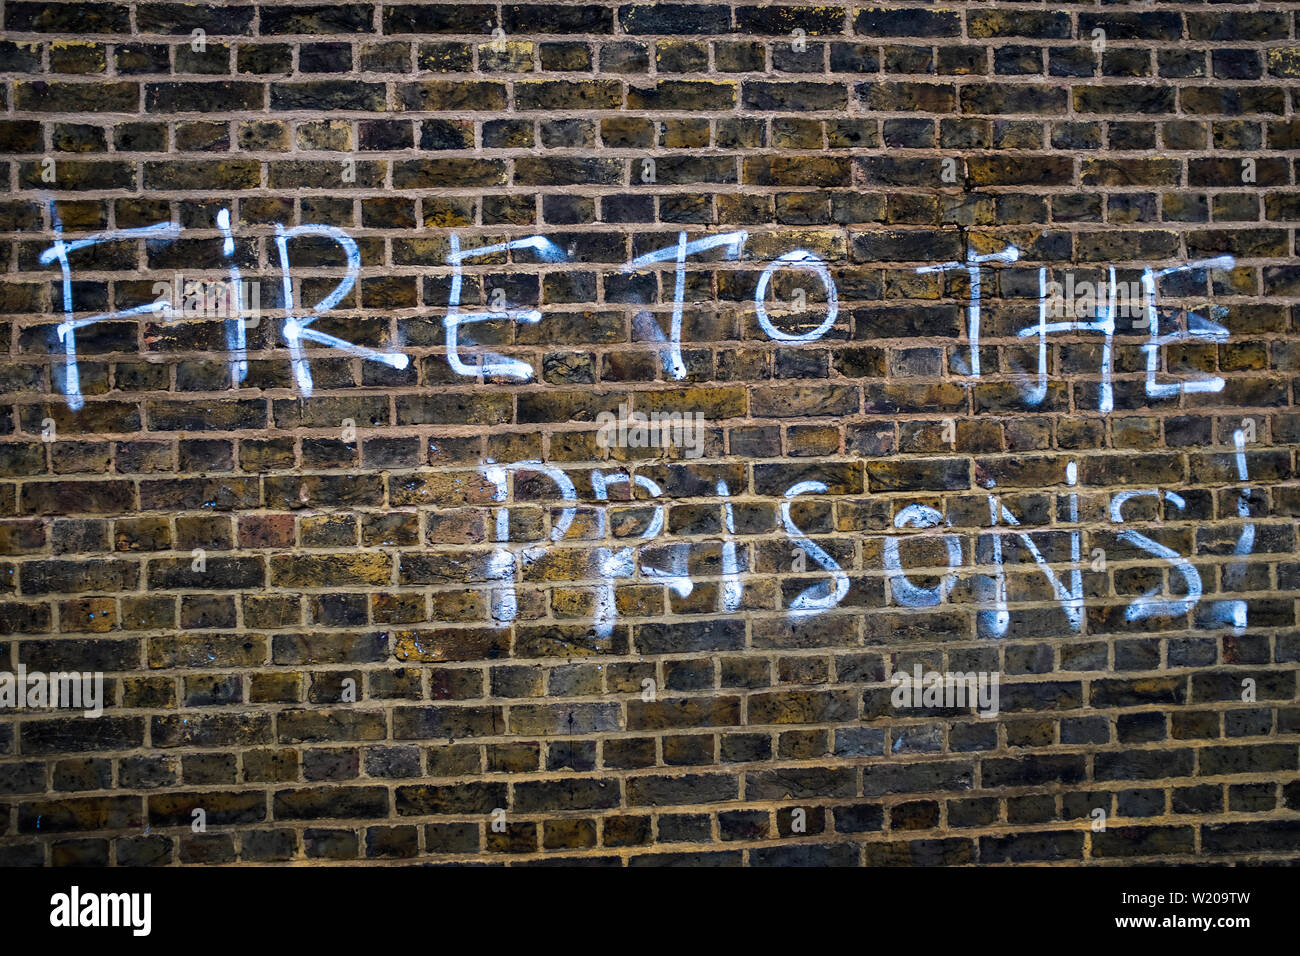 Fire to the Prisons graffiti spray-painted on Briston Prison, Brixton, England. Stock Photo